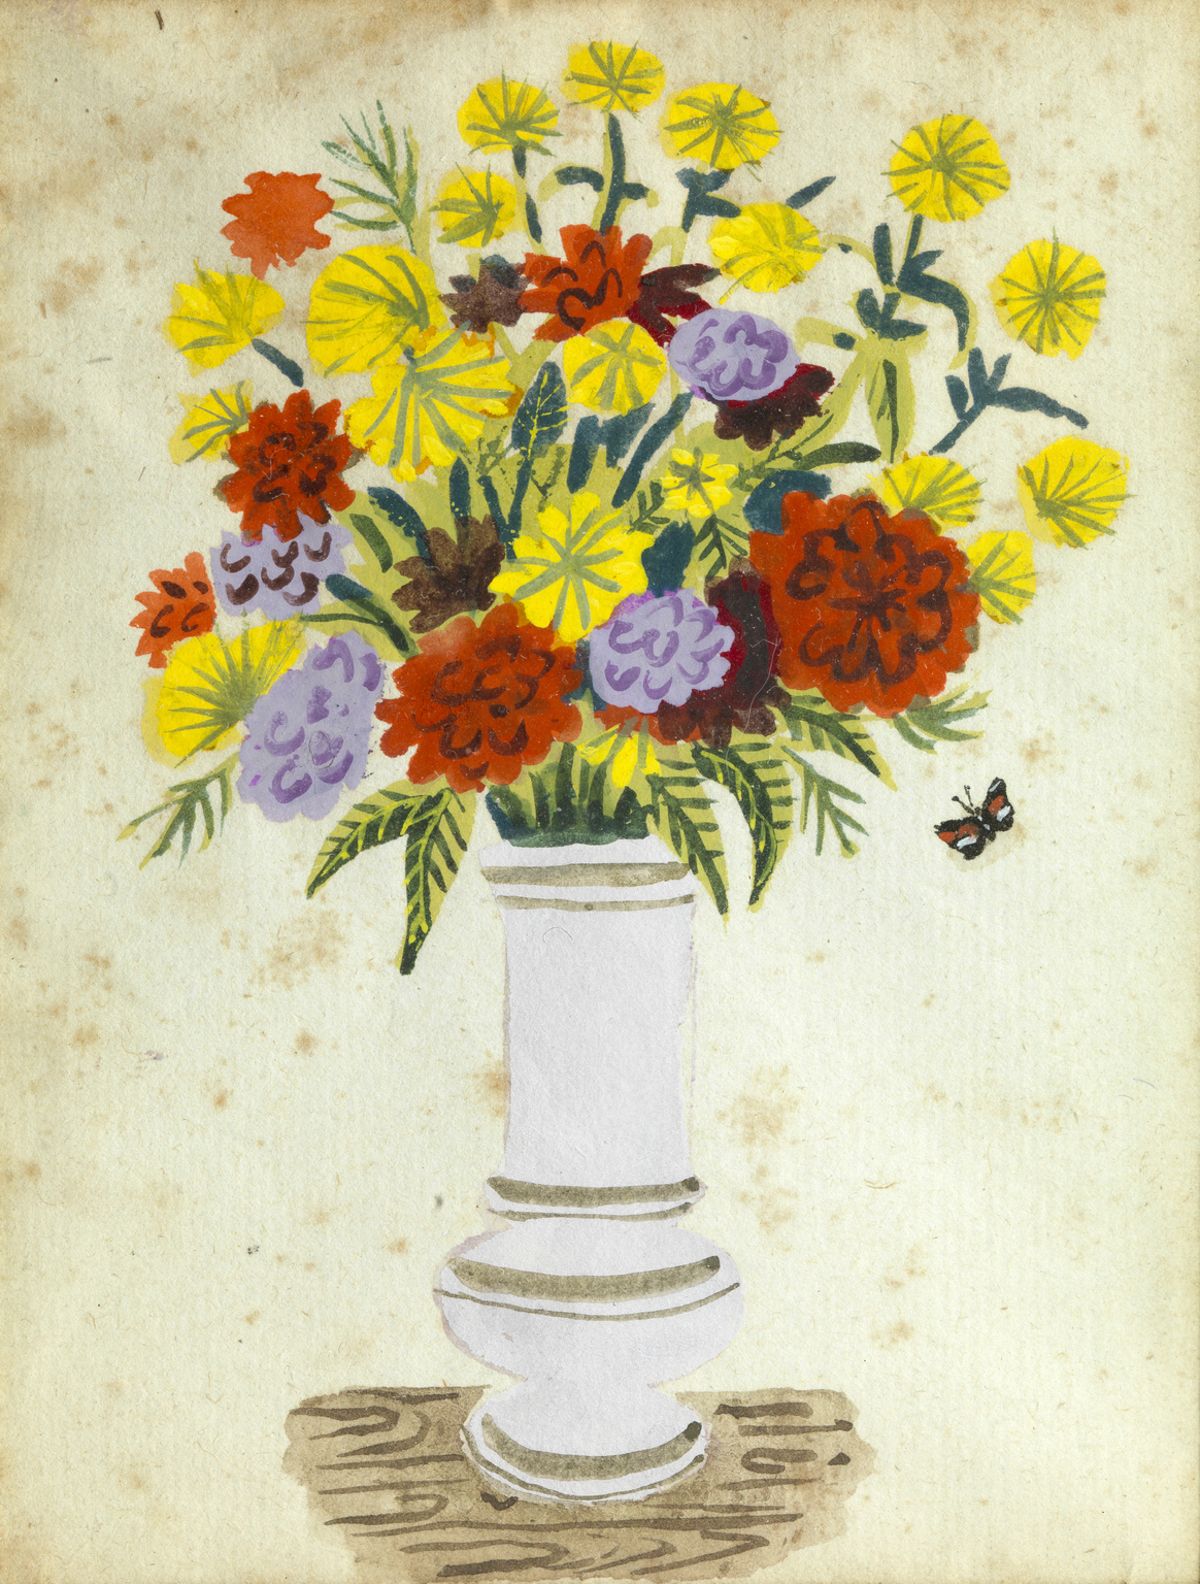 Null Jean HUGO (1894 - 1984) 花瓶和蝴蝶 水粉画 贺卡上的签名是29.12.49 玻璃下装裱 褪色 12 x 9 cm